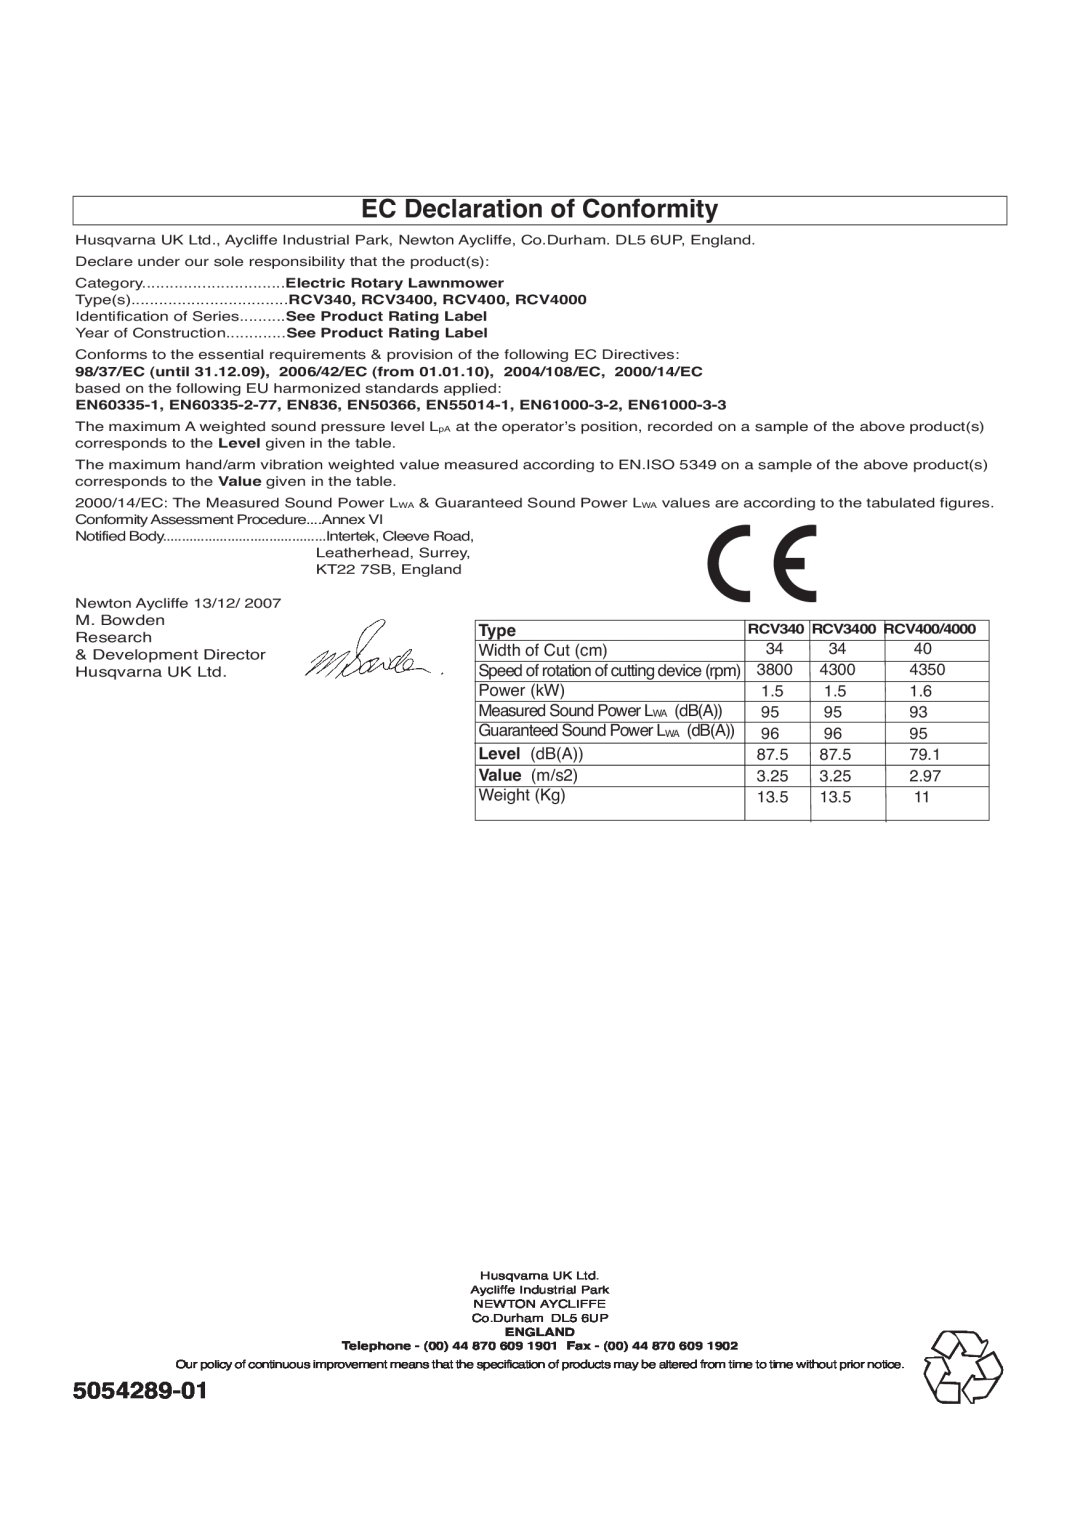 Flymo 3400 manual EC Declaration of Conformity, Type, Width of Cut cm, Power kW, Level dBA, Value m/s2, Weight Kg 